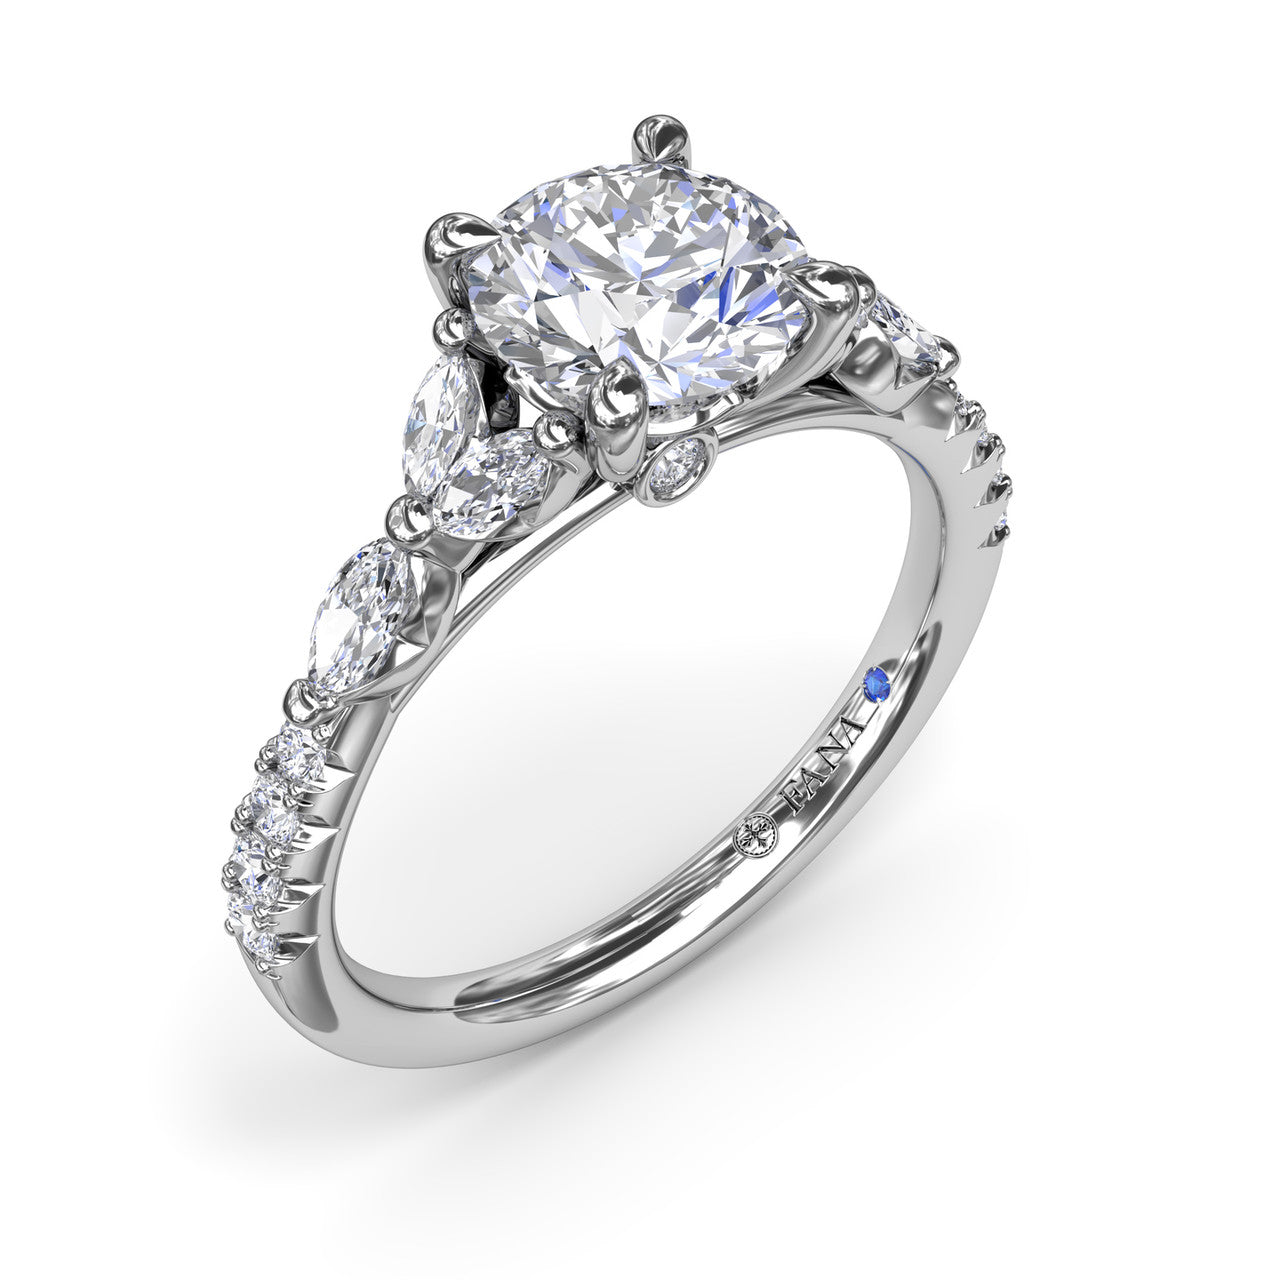 FANA White Gold Side Stones Diamond Engagement Ring S4121/WG